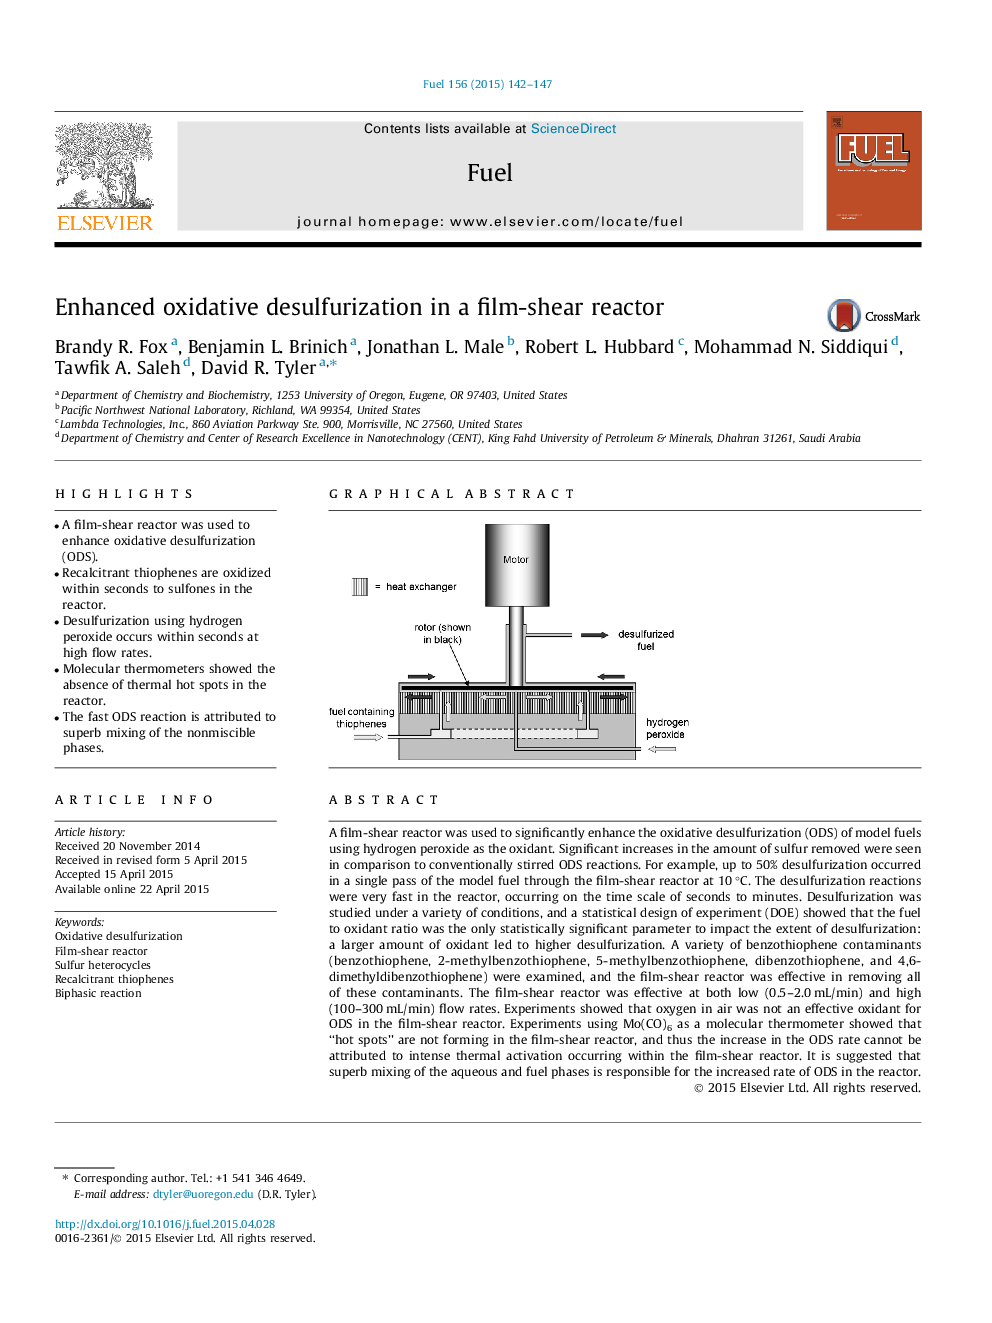 Enhanced oxidative desulfurization in a film-shear reactor